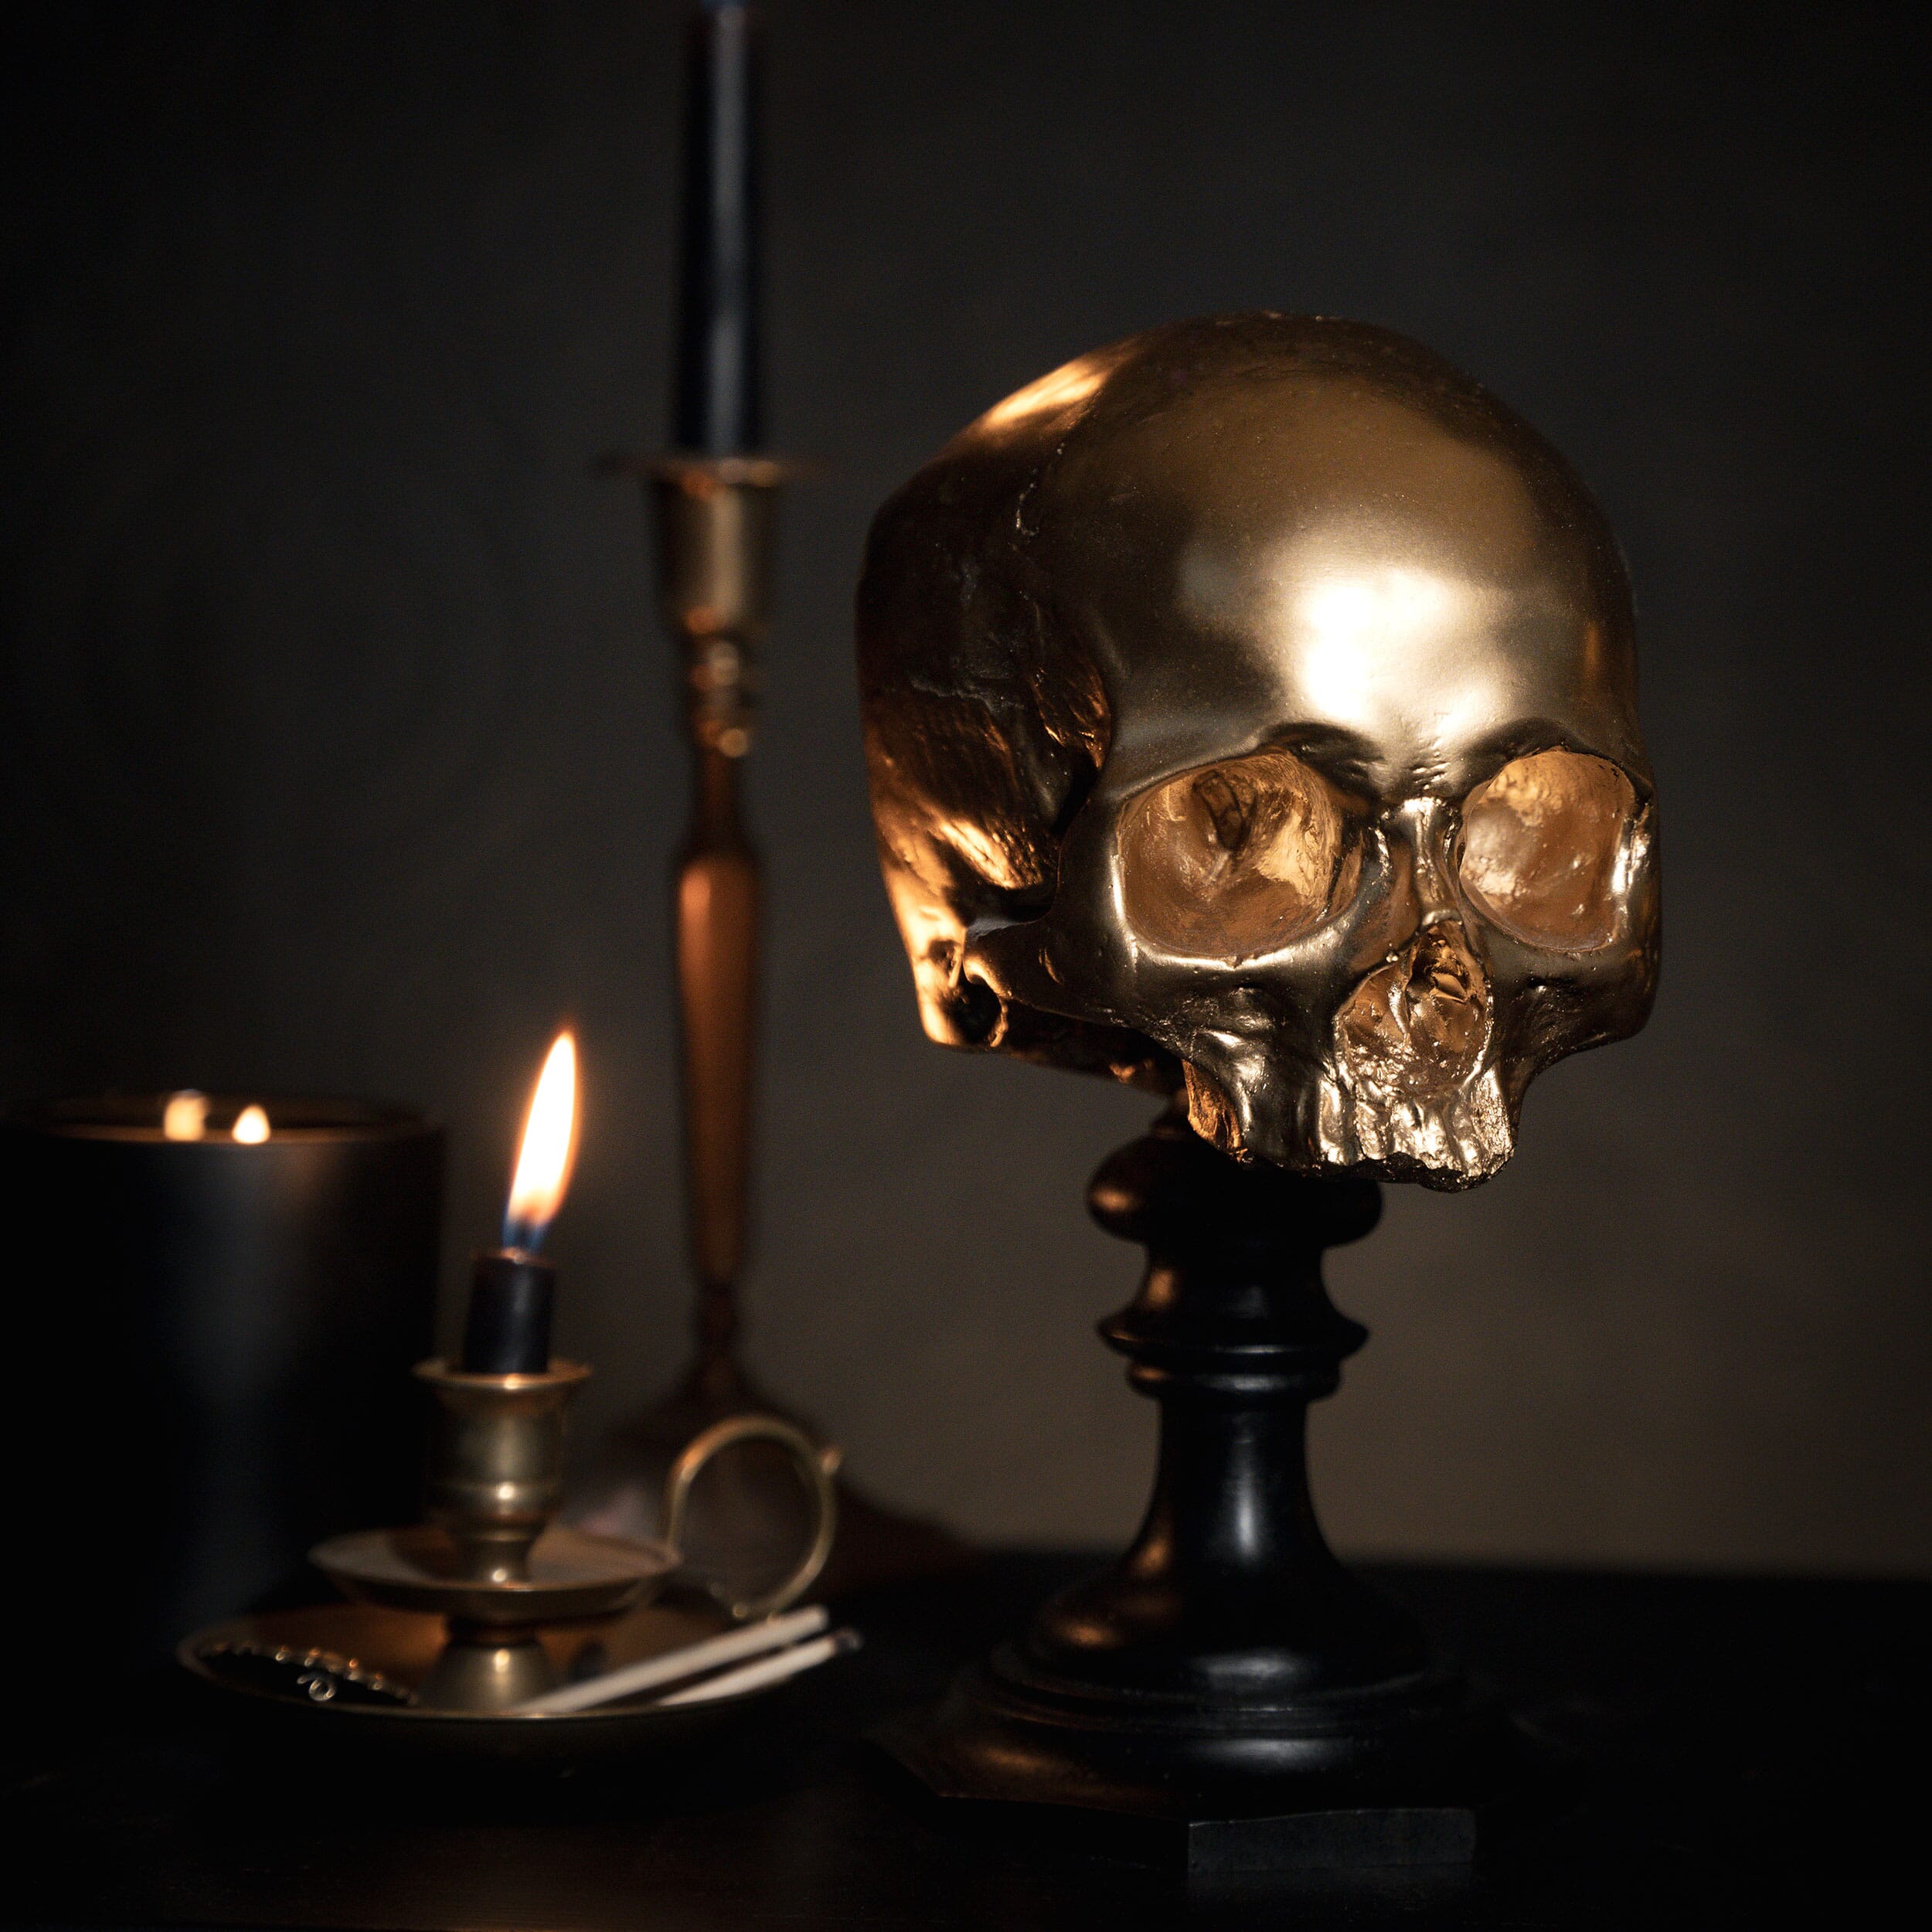 aureate gold skull plinth the blackened teeth gothic home decor 